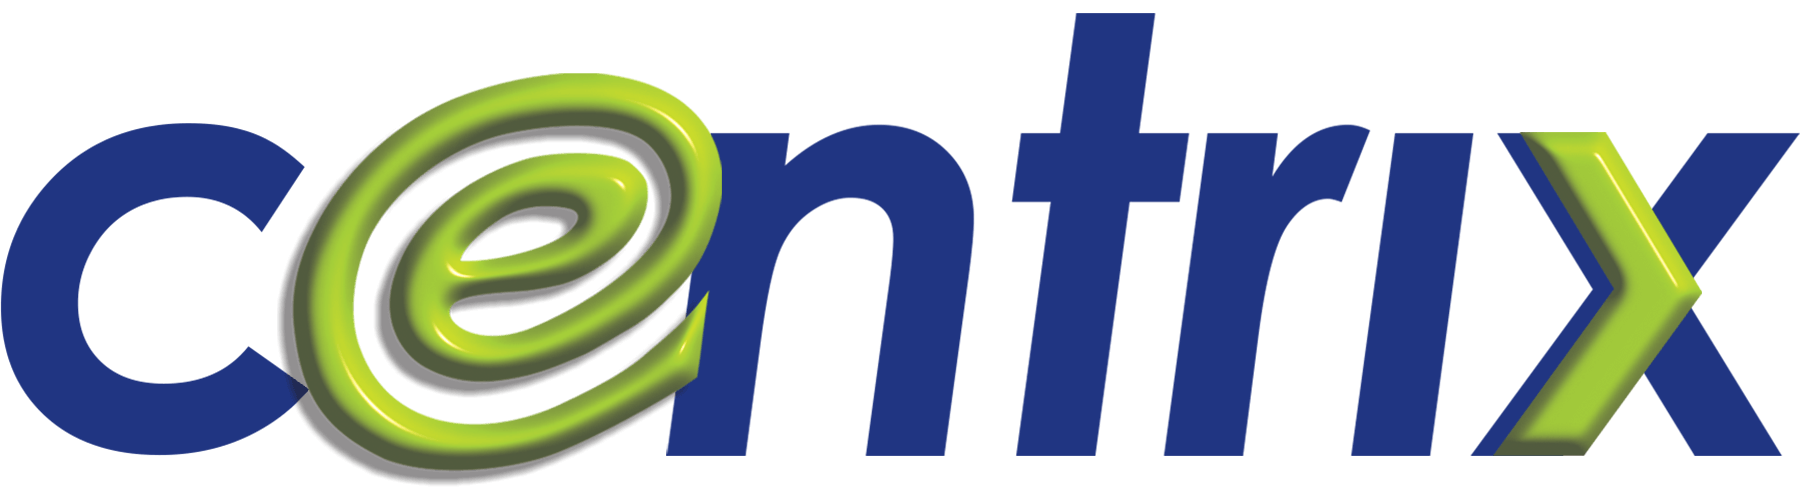 Centrix Corp. logo